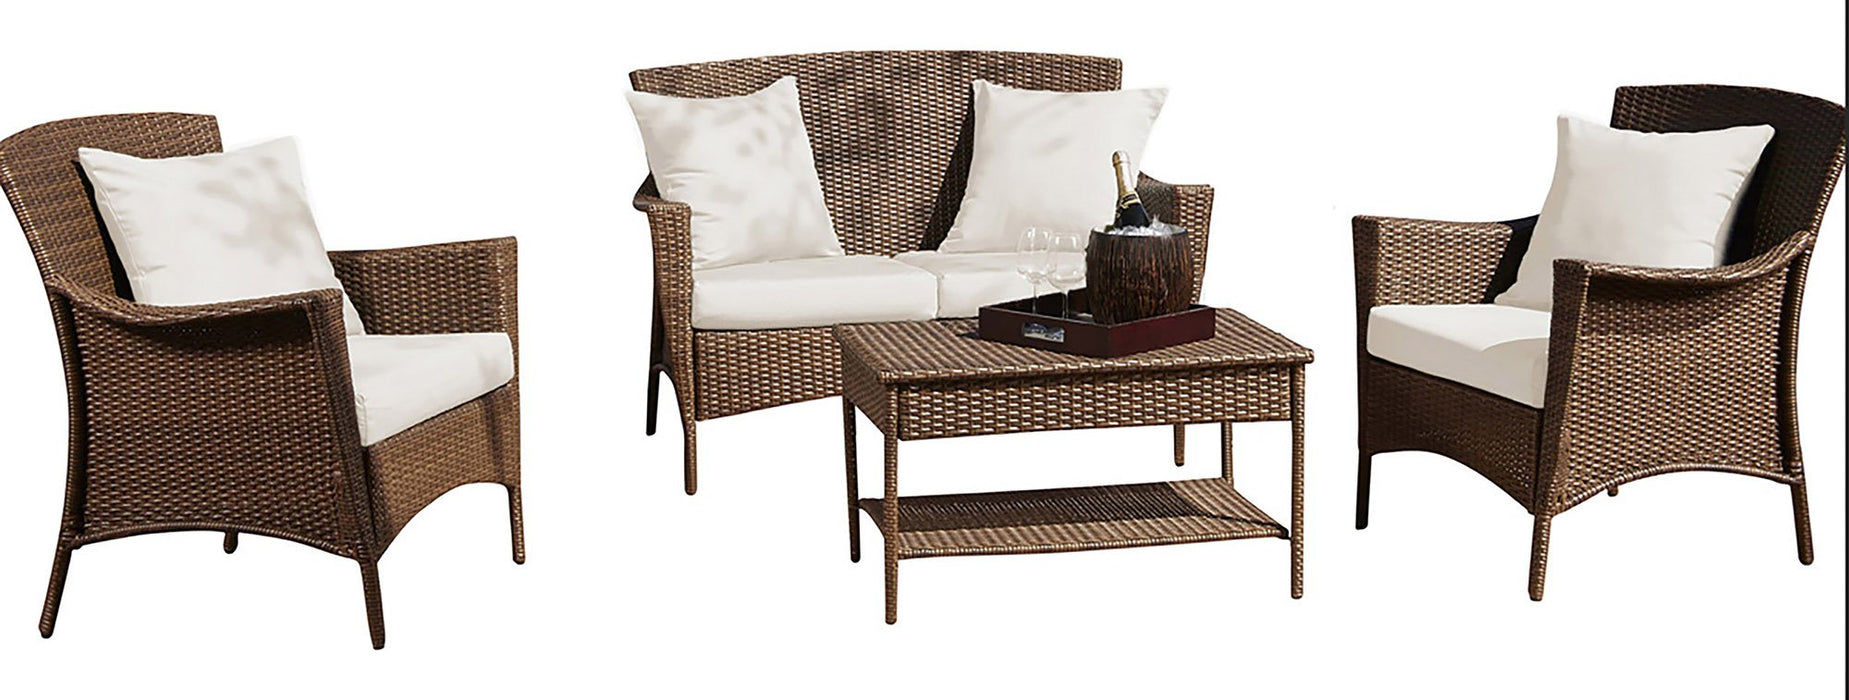 Panama Jack Panama Jack Key Biscayne 4 PC Seating Group with Cushions Standard Living Set PJO-7001-ATQ-4PL-GL 193574176162